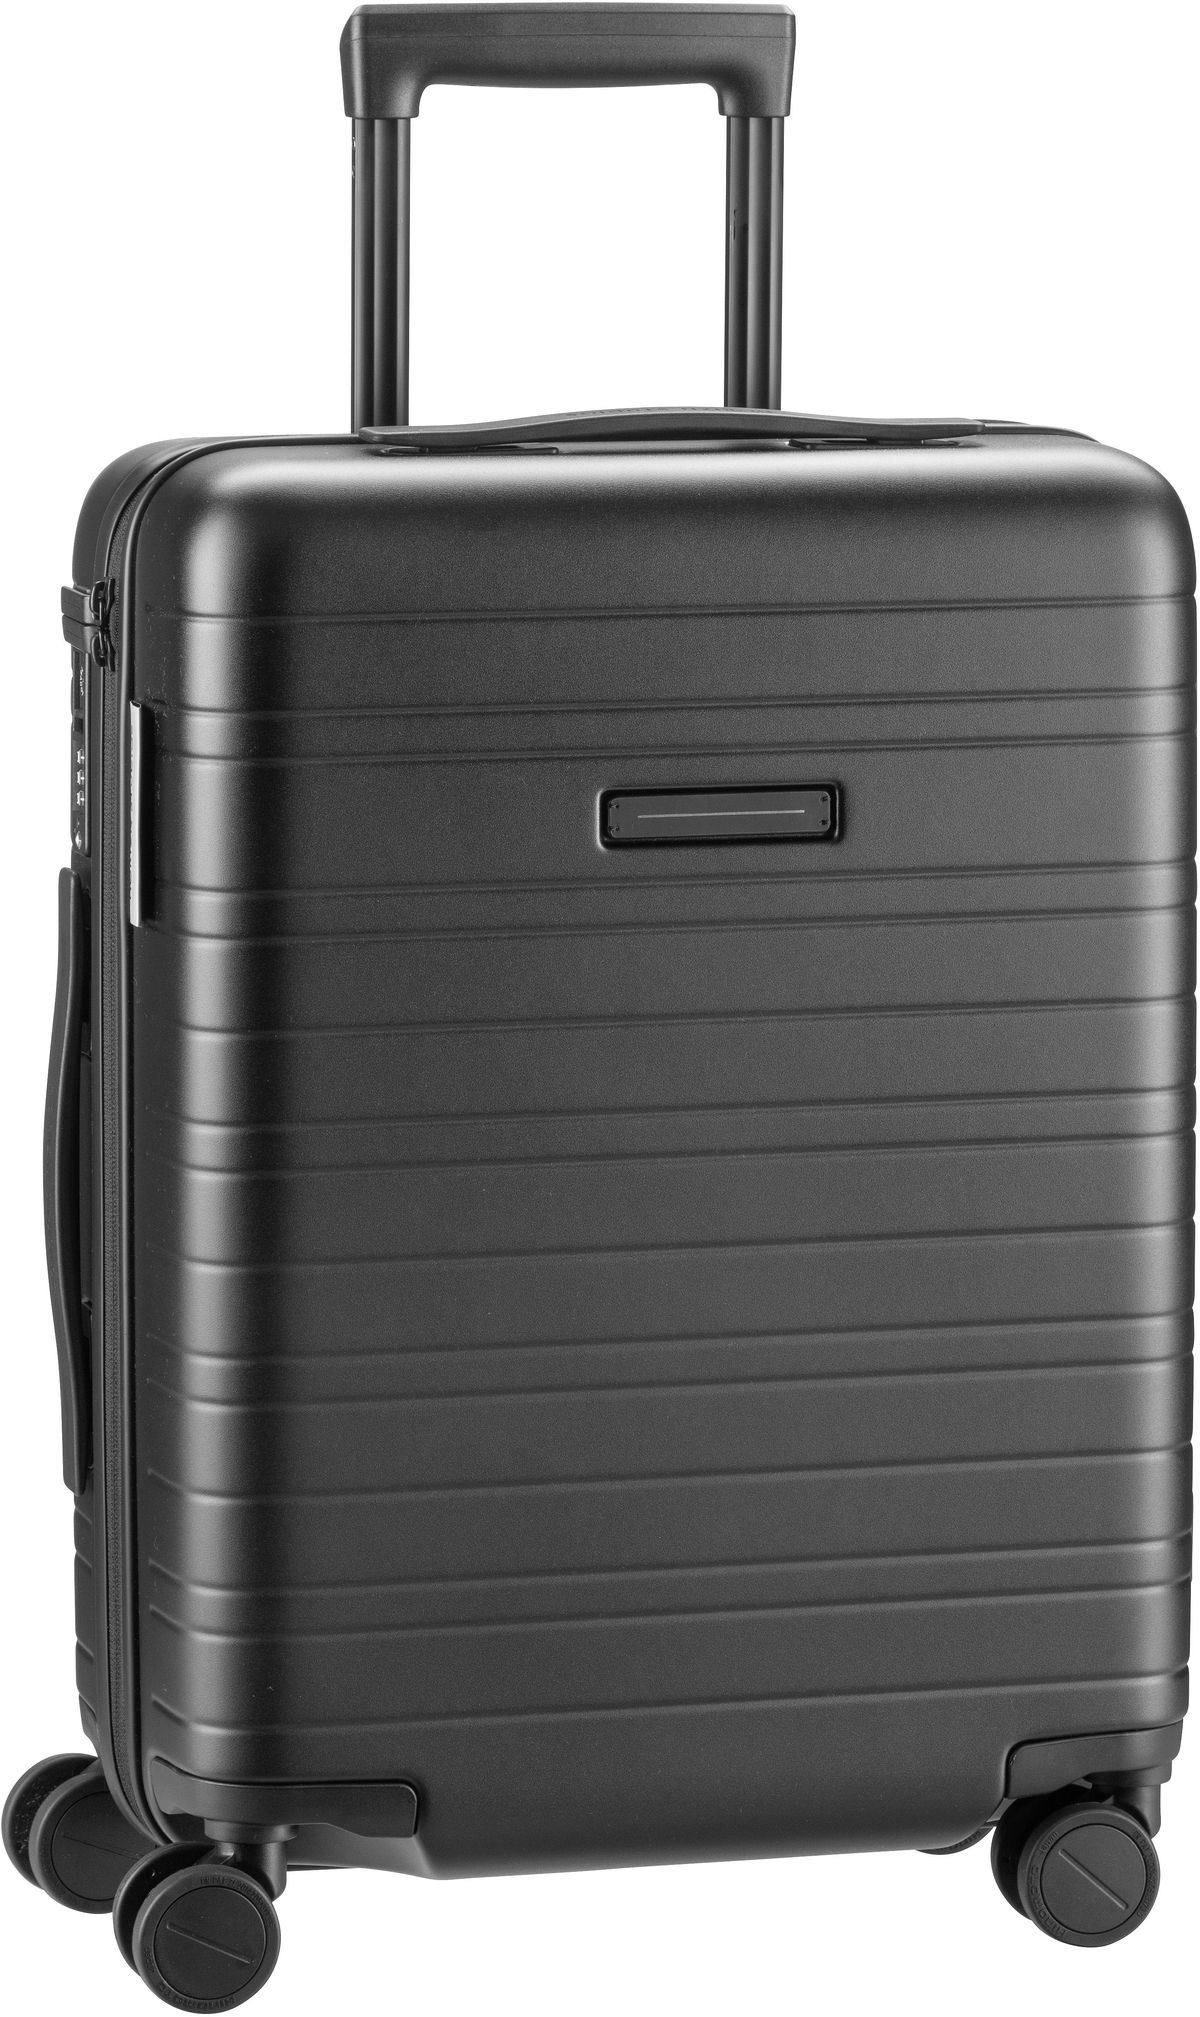 Horizn Studios H5 Essential Cabin Luggage - All Black